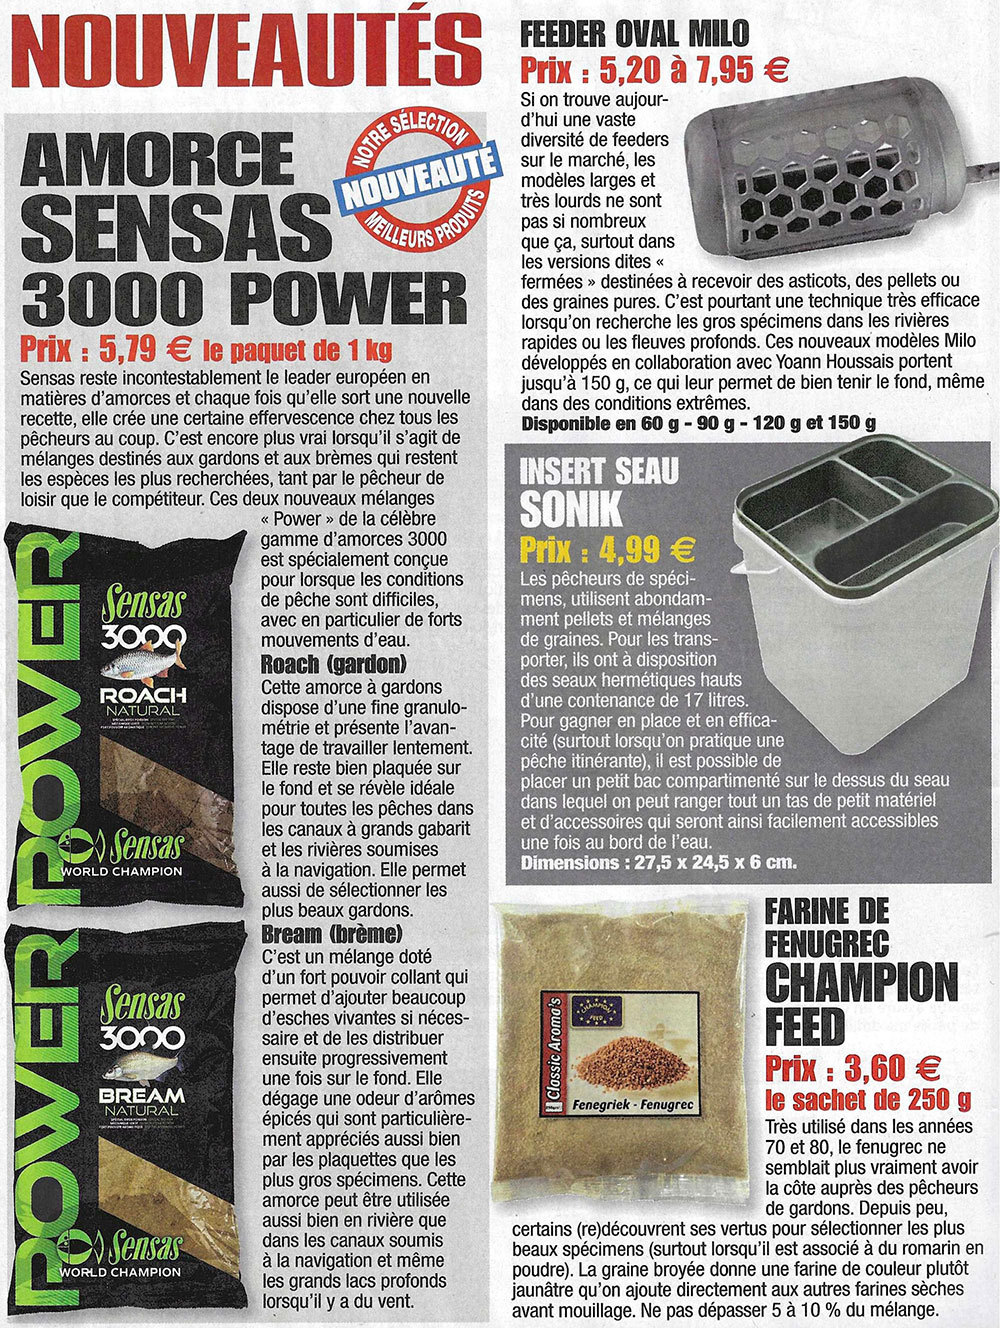 sensas 3000 power